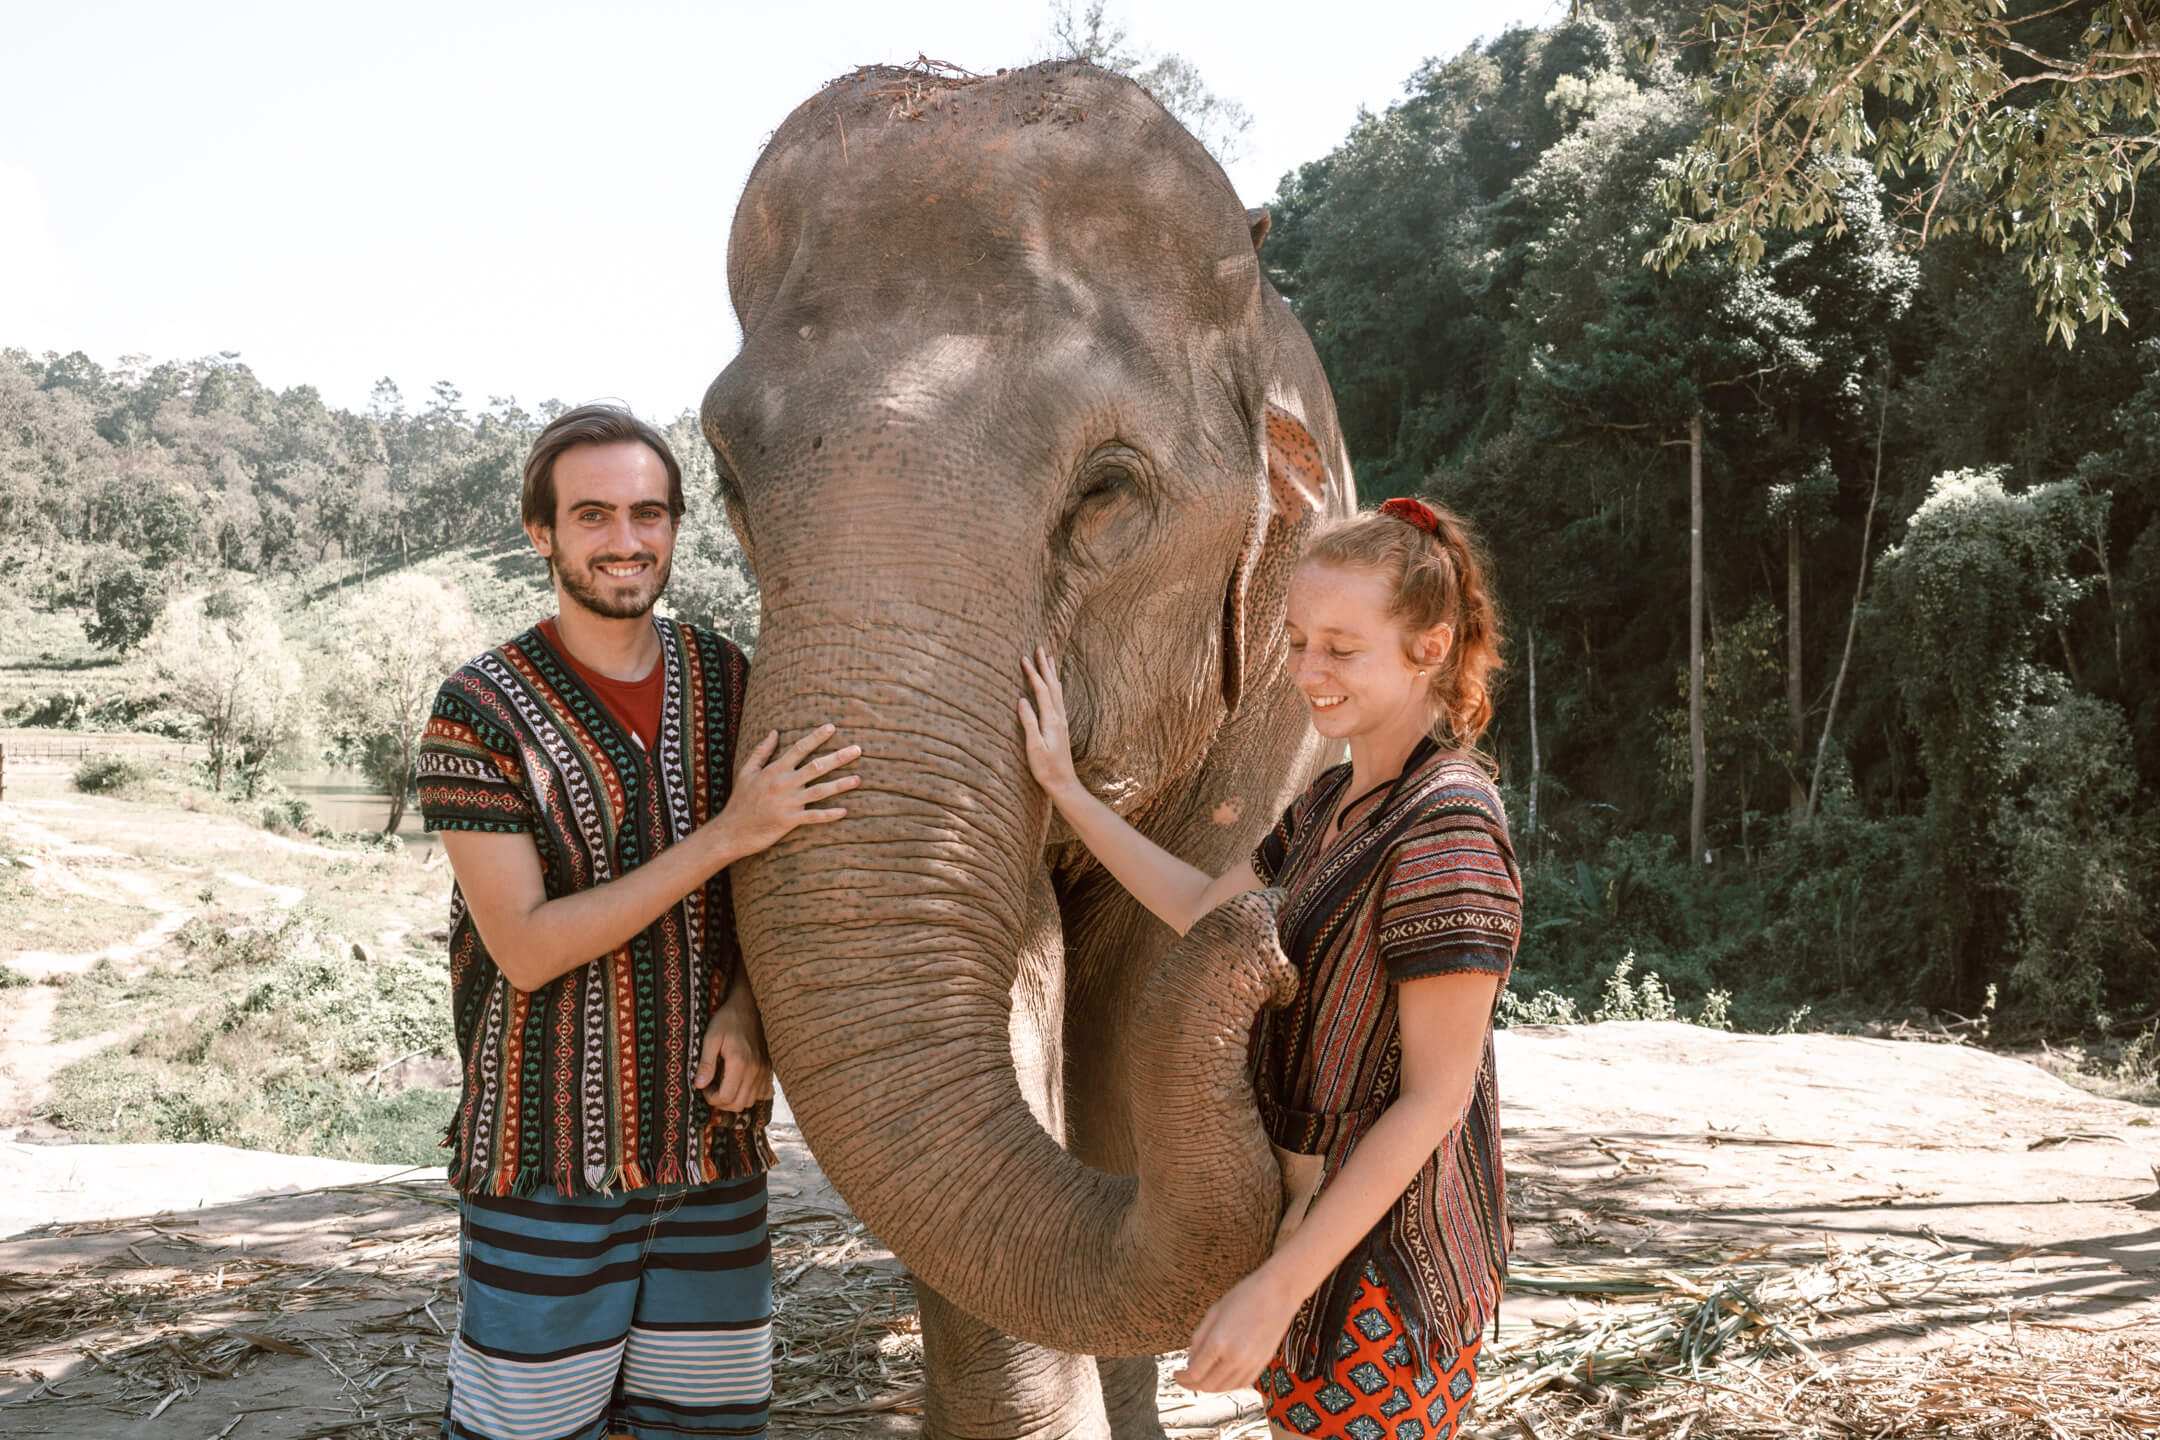 The Elephant Jungle Sanctuary in Thailand